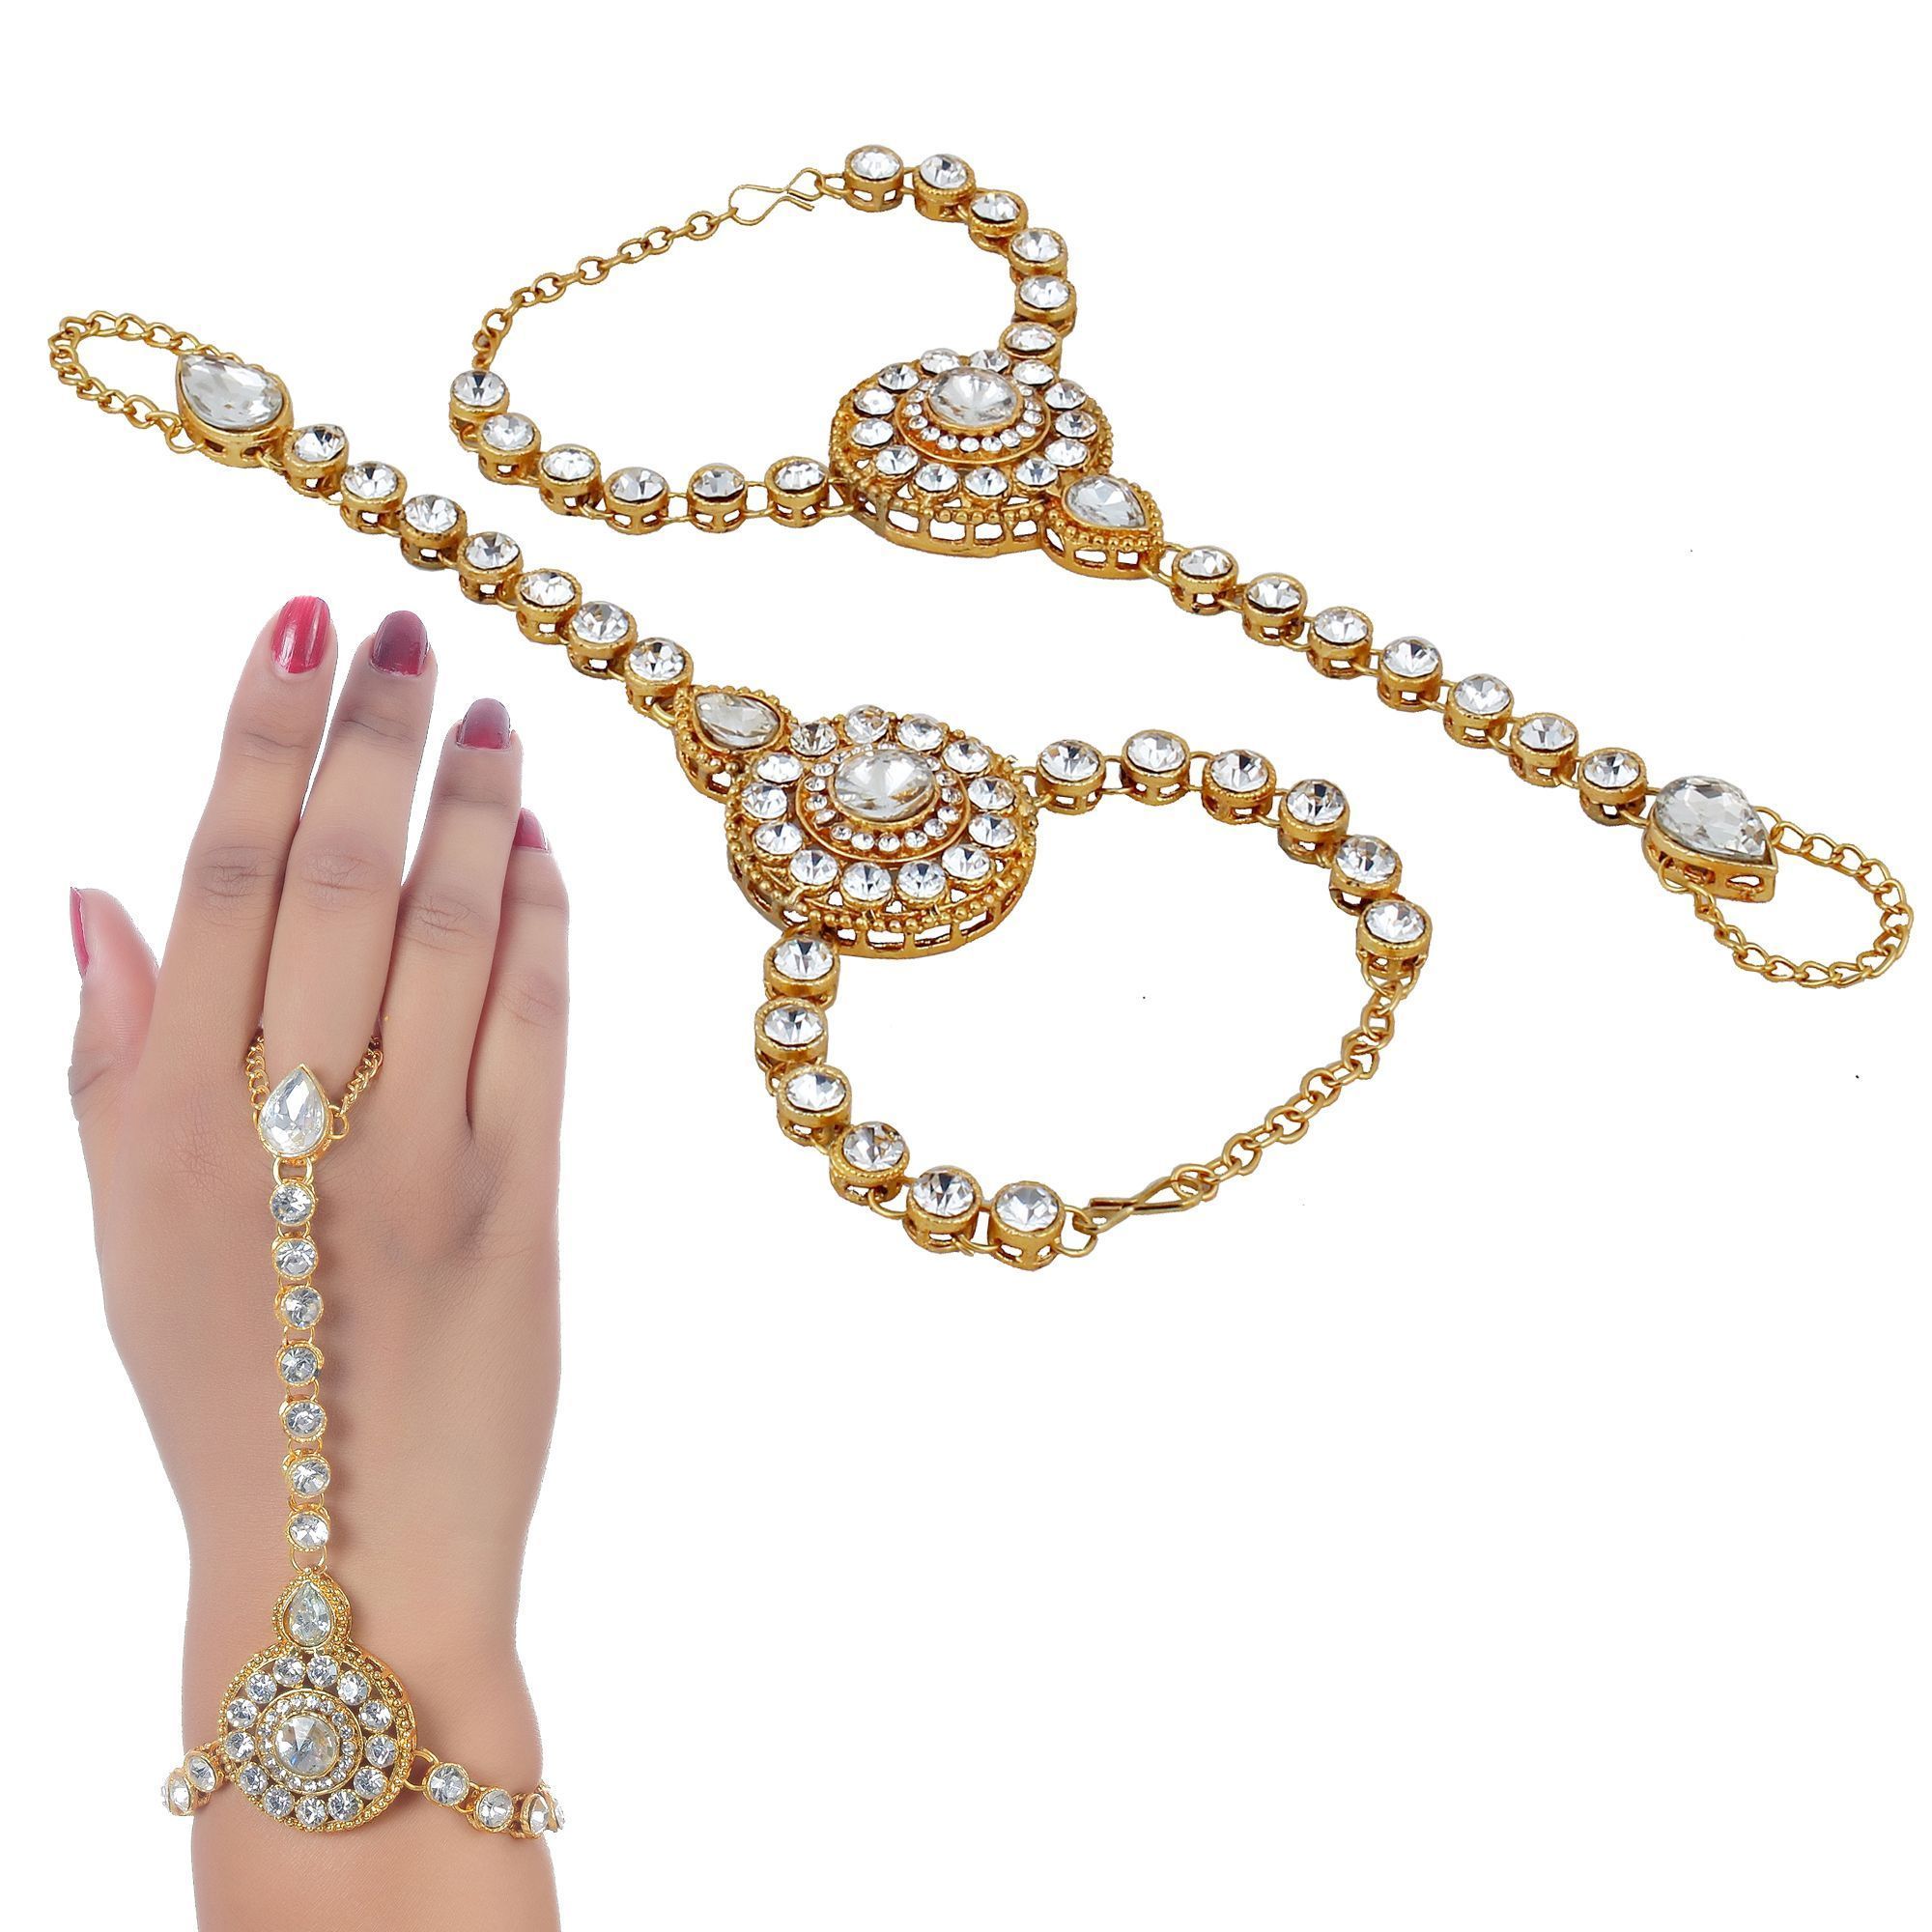 Minimalist Daisy Chain Gold Bracelet with White Diamonds – ARTEMER